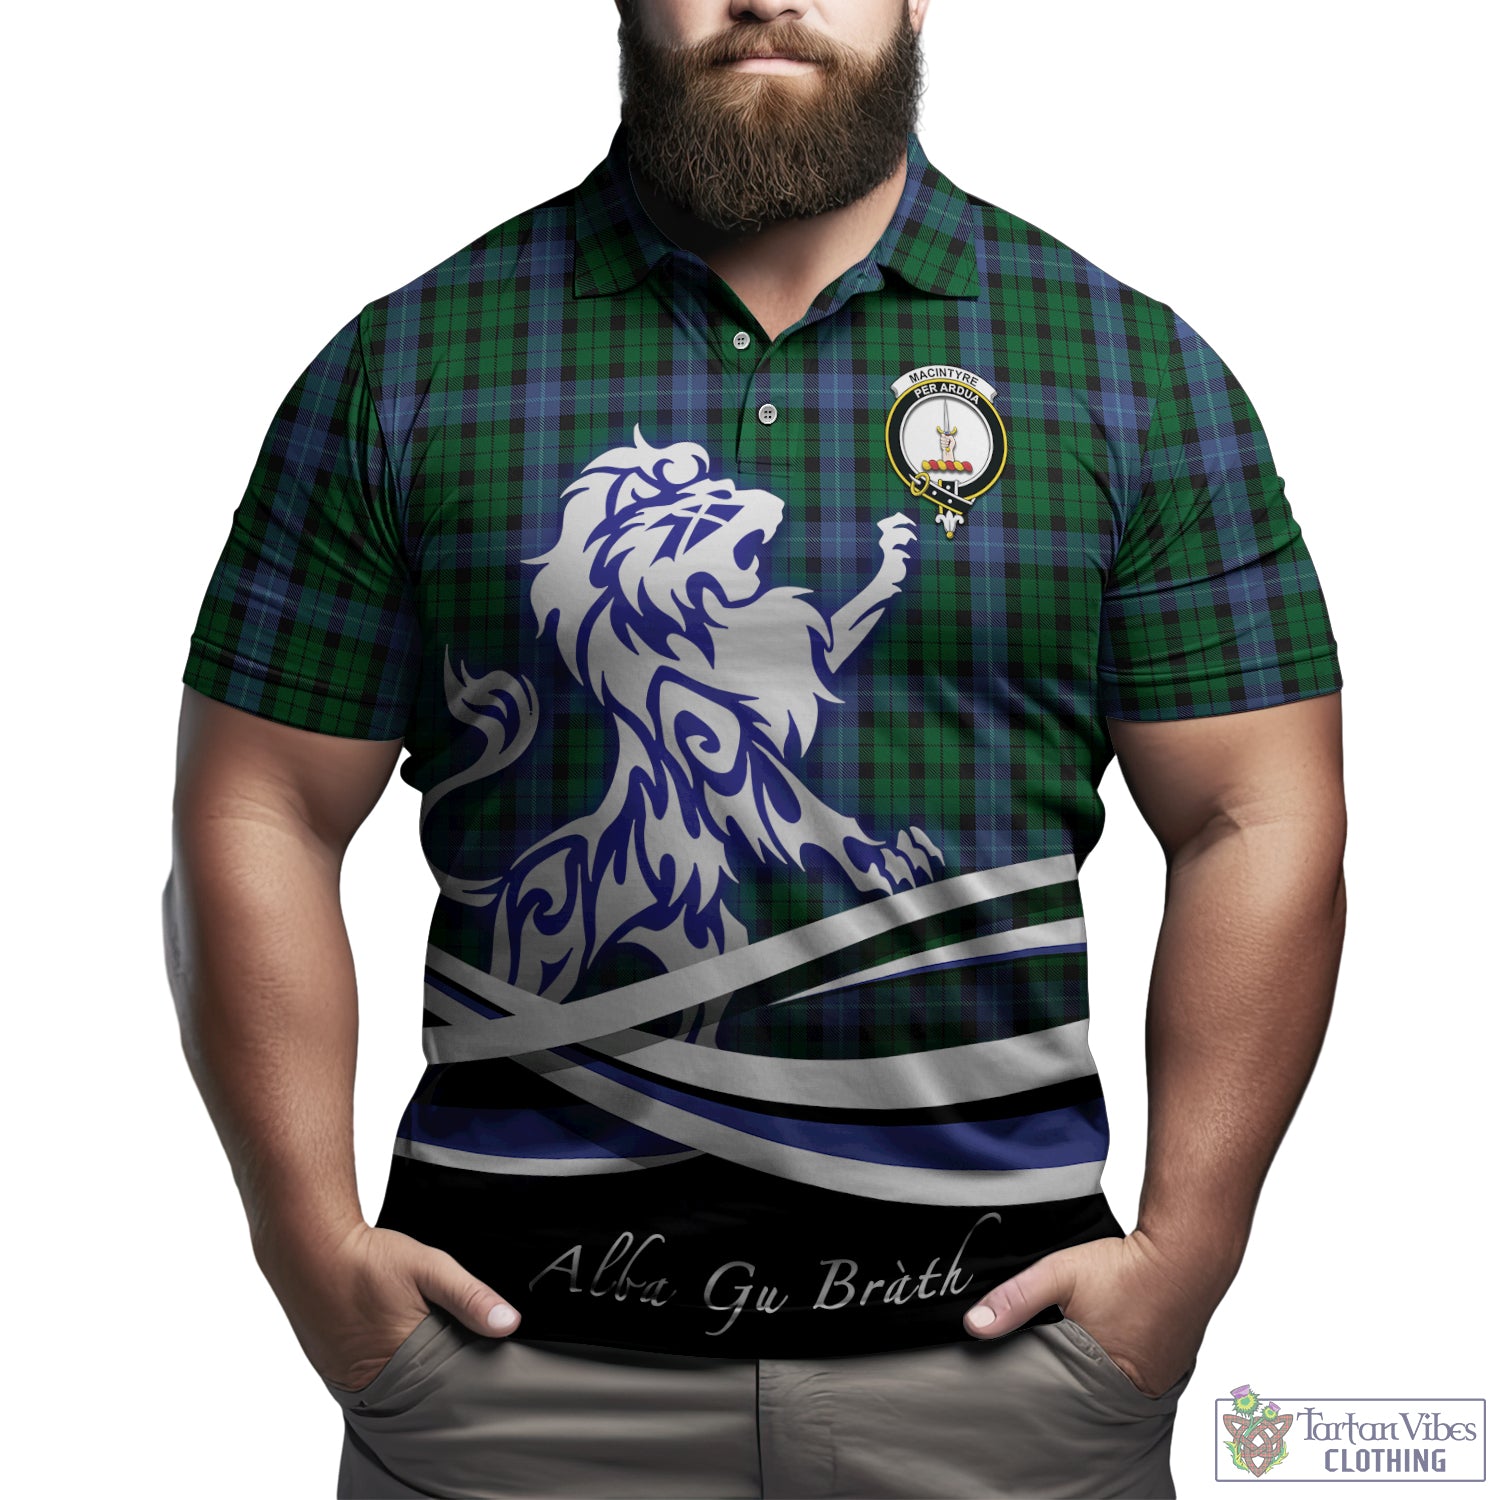 macintyre-tartan-polo-shirt-with-alba-gu-brath-regal-lion-emblem